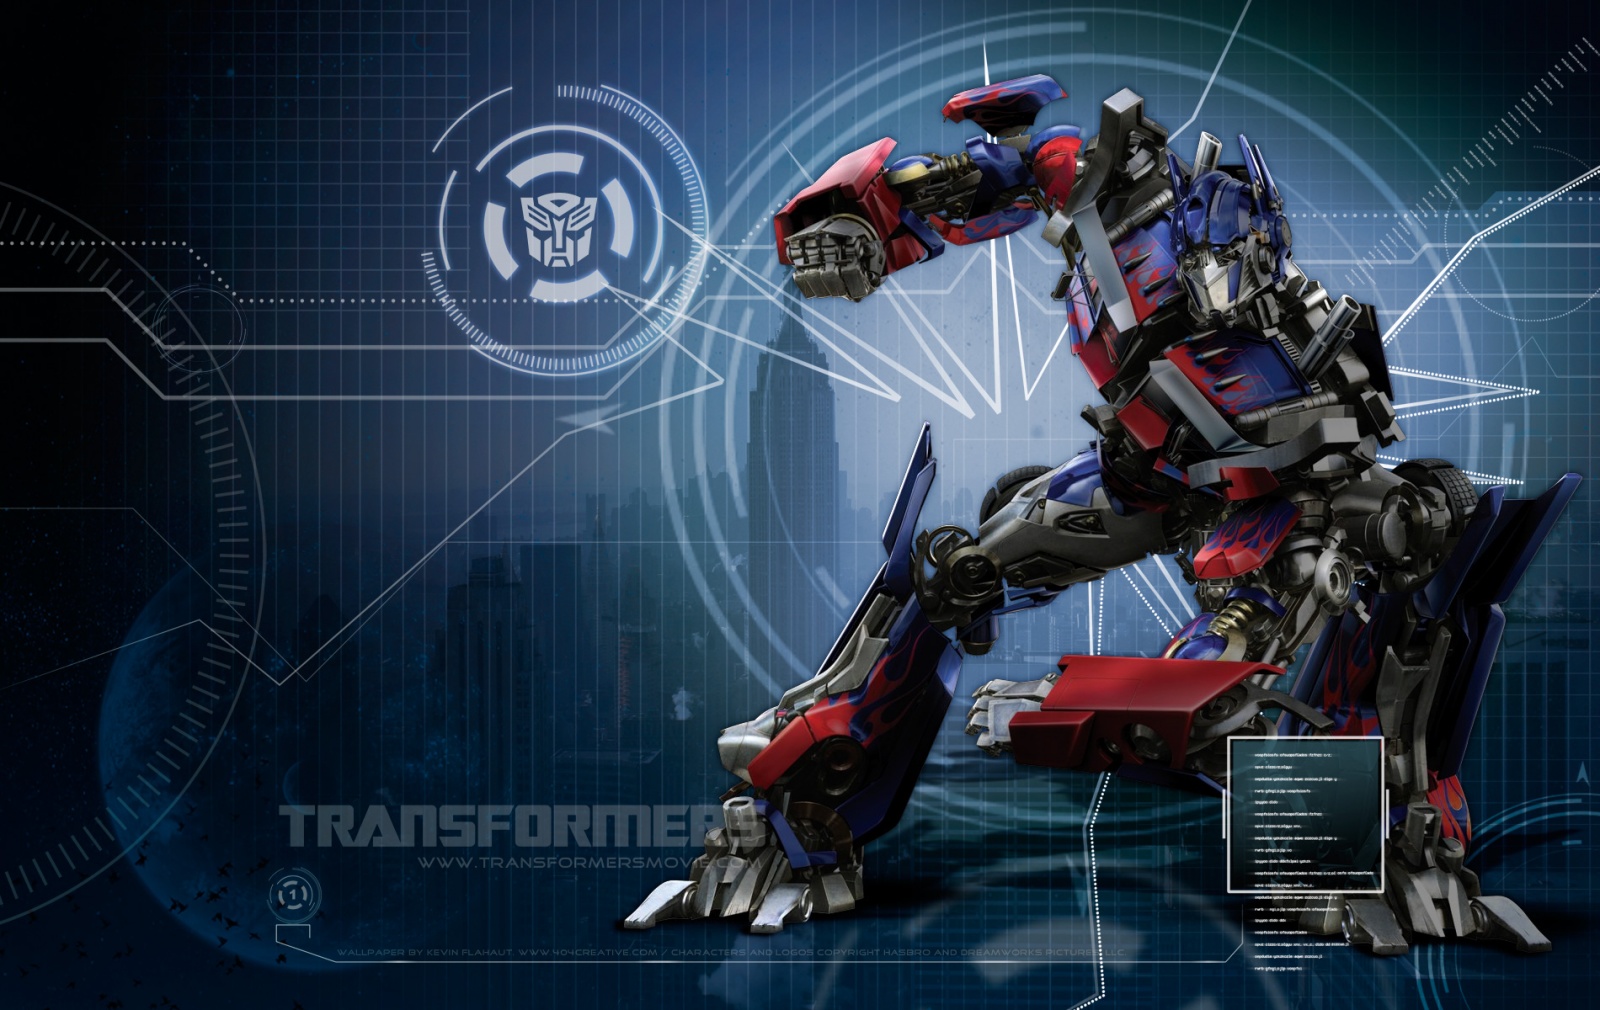 Transformers wallpaper 9jpg HD Wallpapers HD images